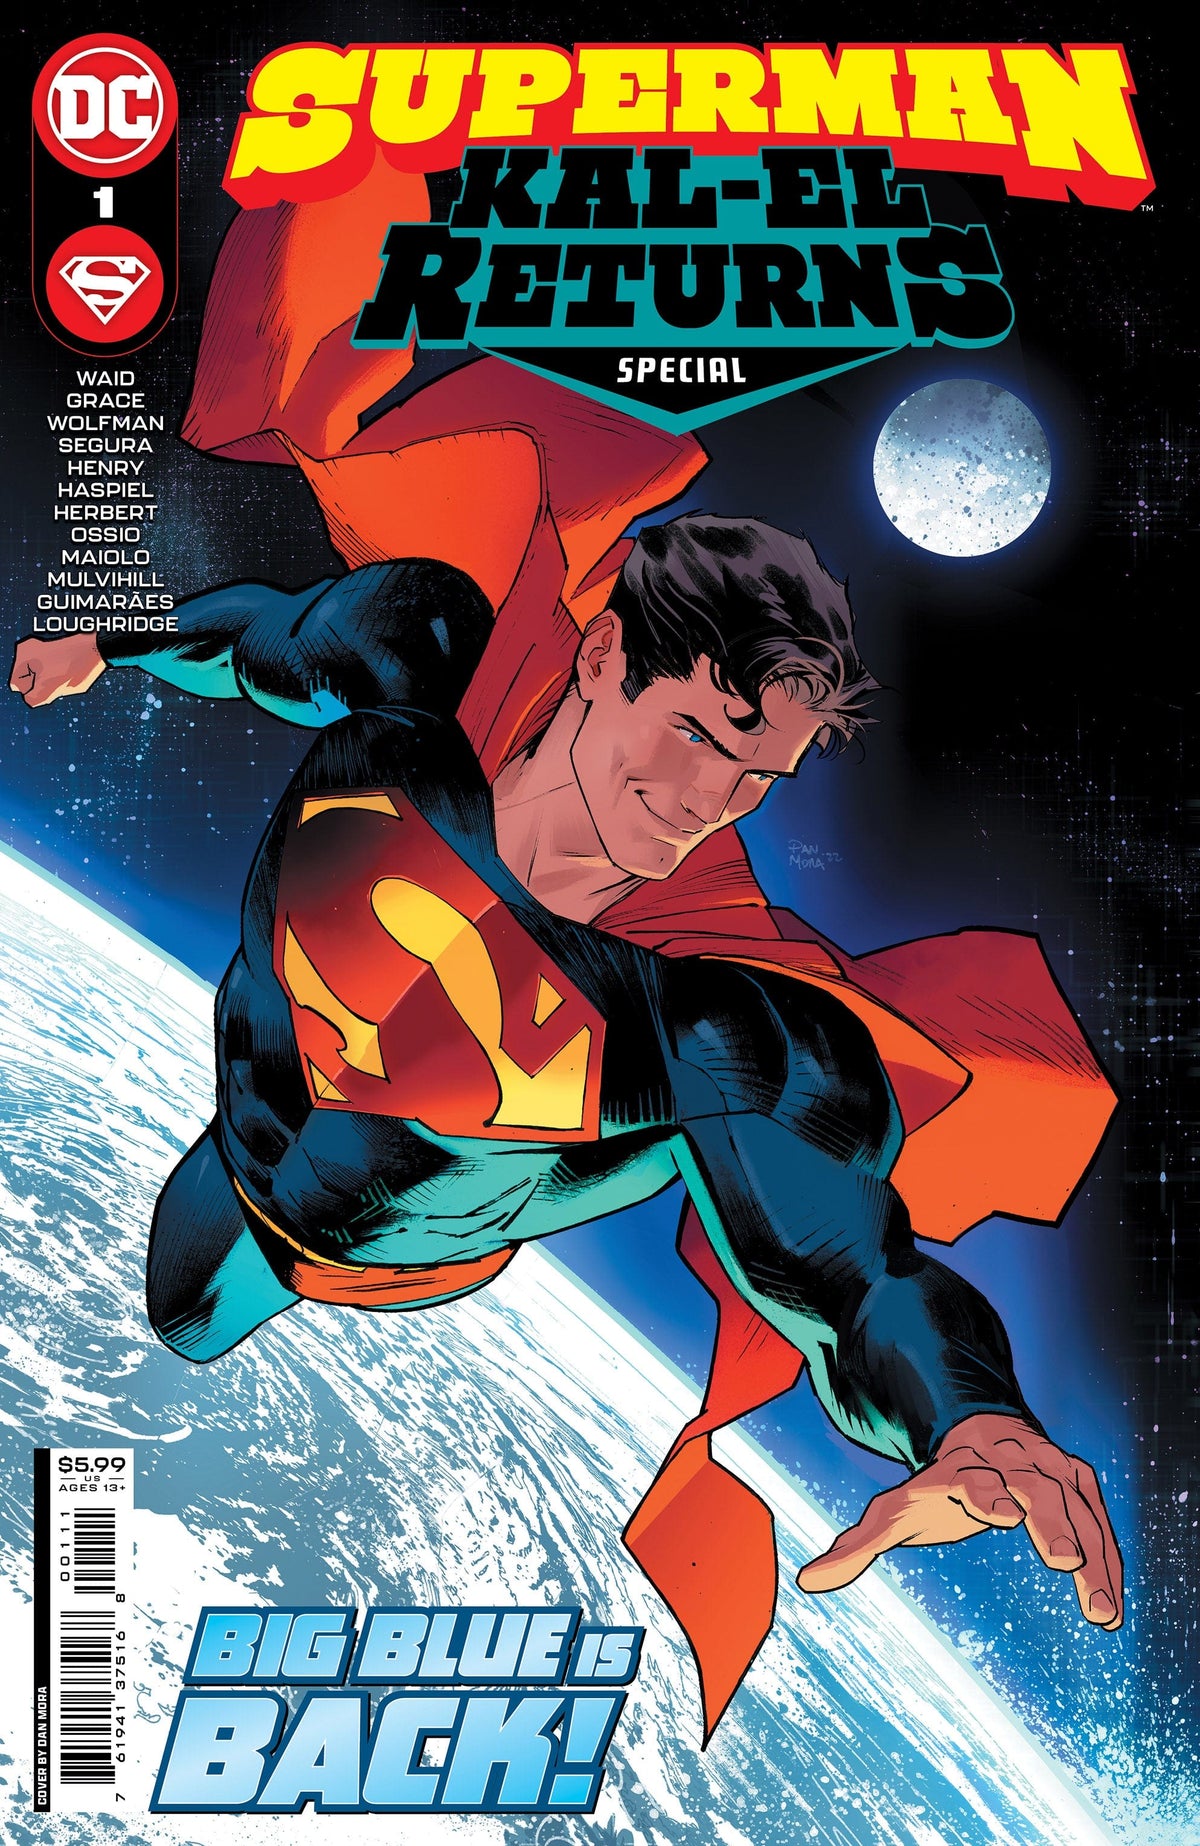 SUPERMAN KAL-EL RETURNS SPECIAL #1 (ONE SHOT) CVR A DAN MORA (DARK CRISIS) - Third Eye